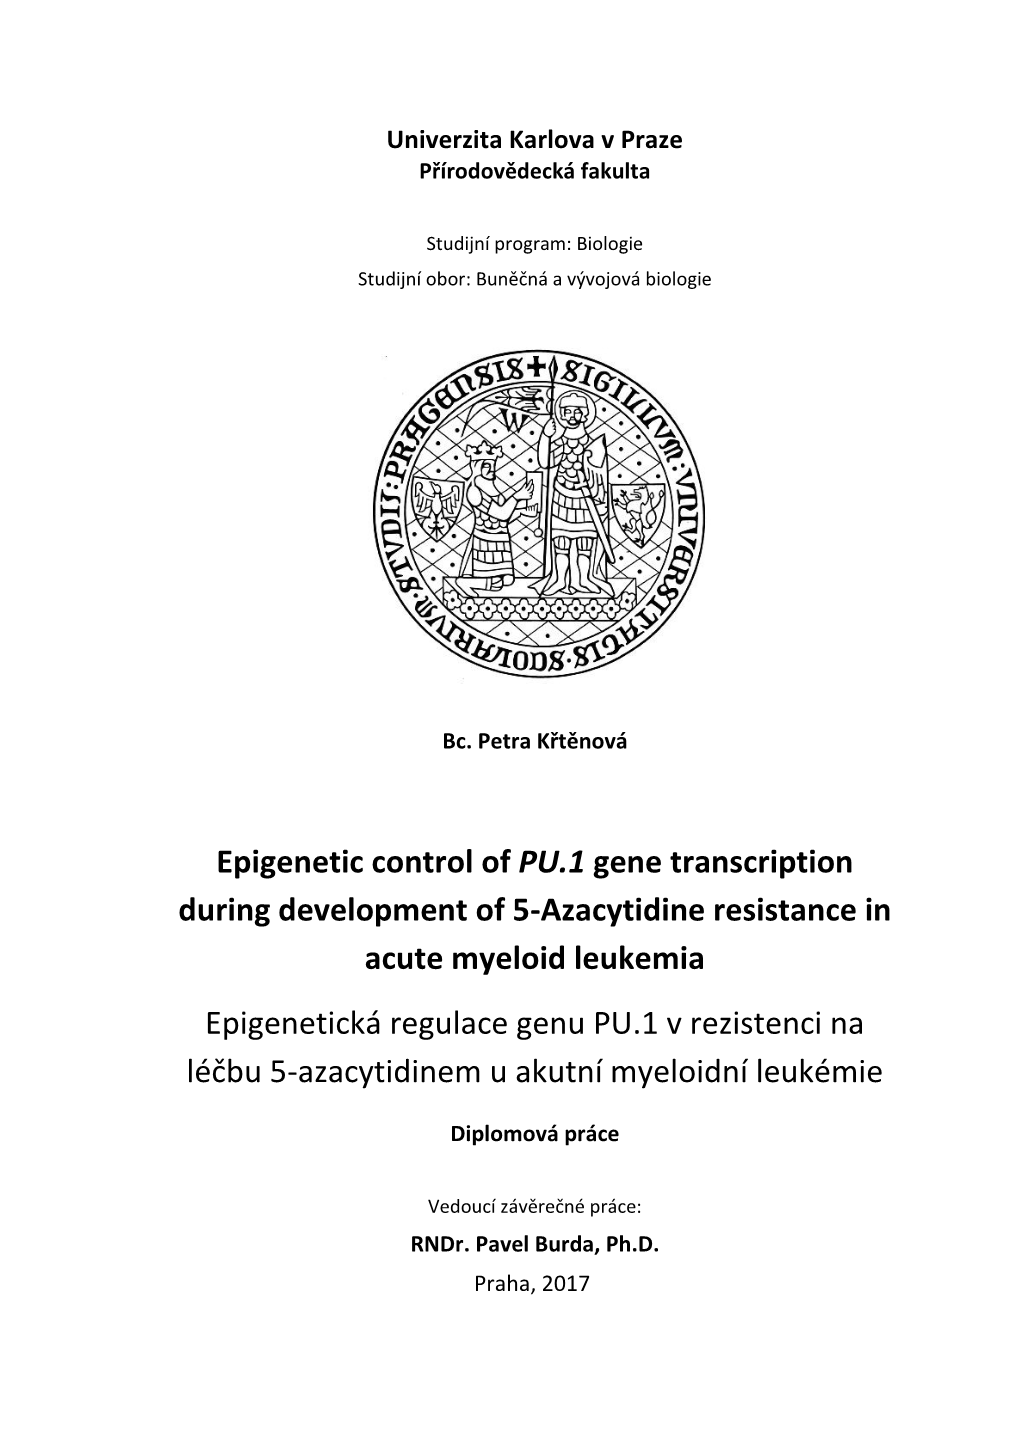 Epigenetic Control of PU.1 Gene Transcription During Development Of